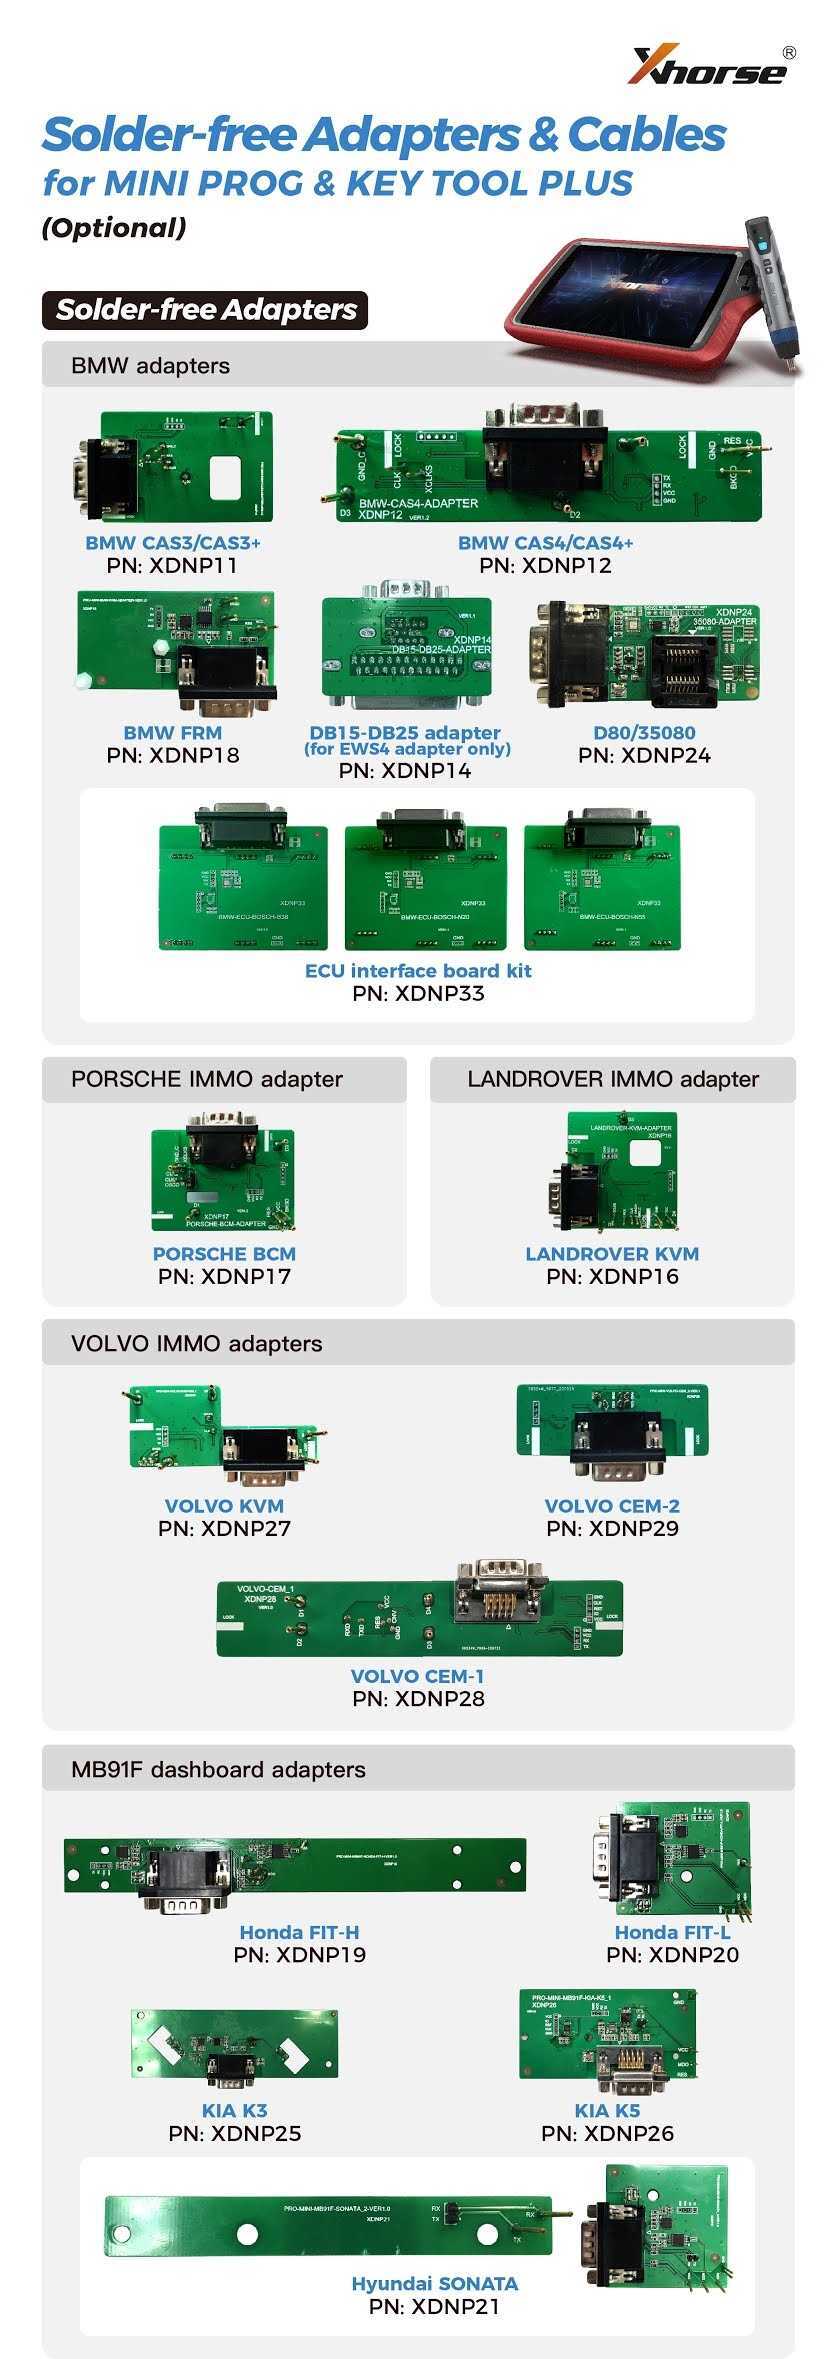 Xhorse Solder Free Adapters Work for VVDI Mini Prog, VVDI Prog and Key Tool Plus Xhorse Solder Free Adapters Work for VVDI Mini Prog, VVDI Prog and Key Tool Plus mini prog adapters,key tool plus adapter,free solder adapters